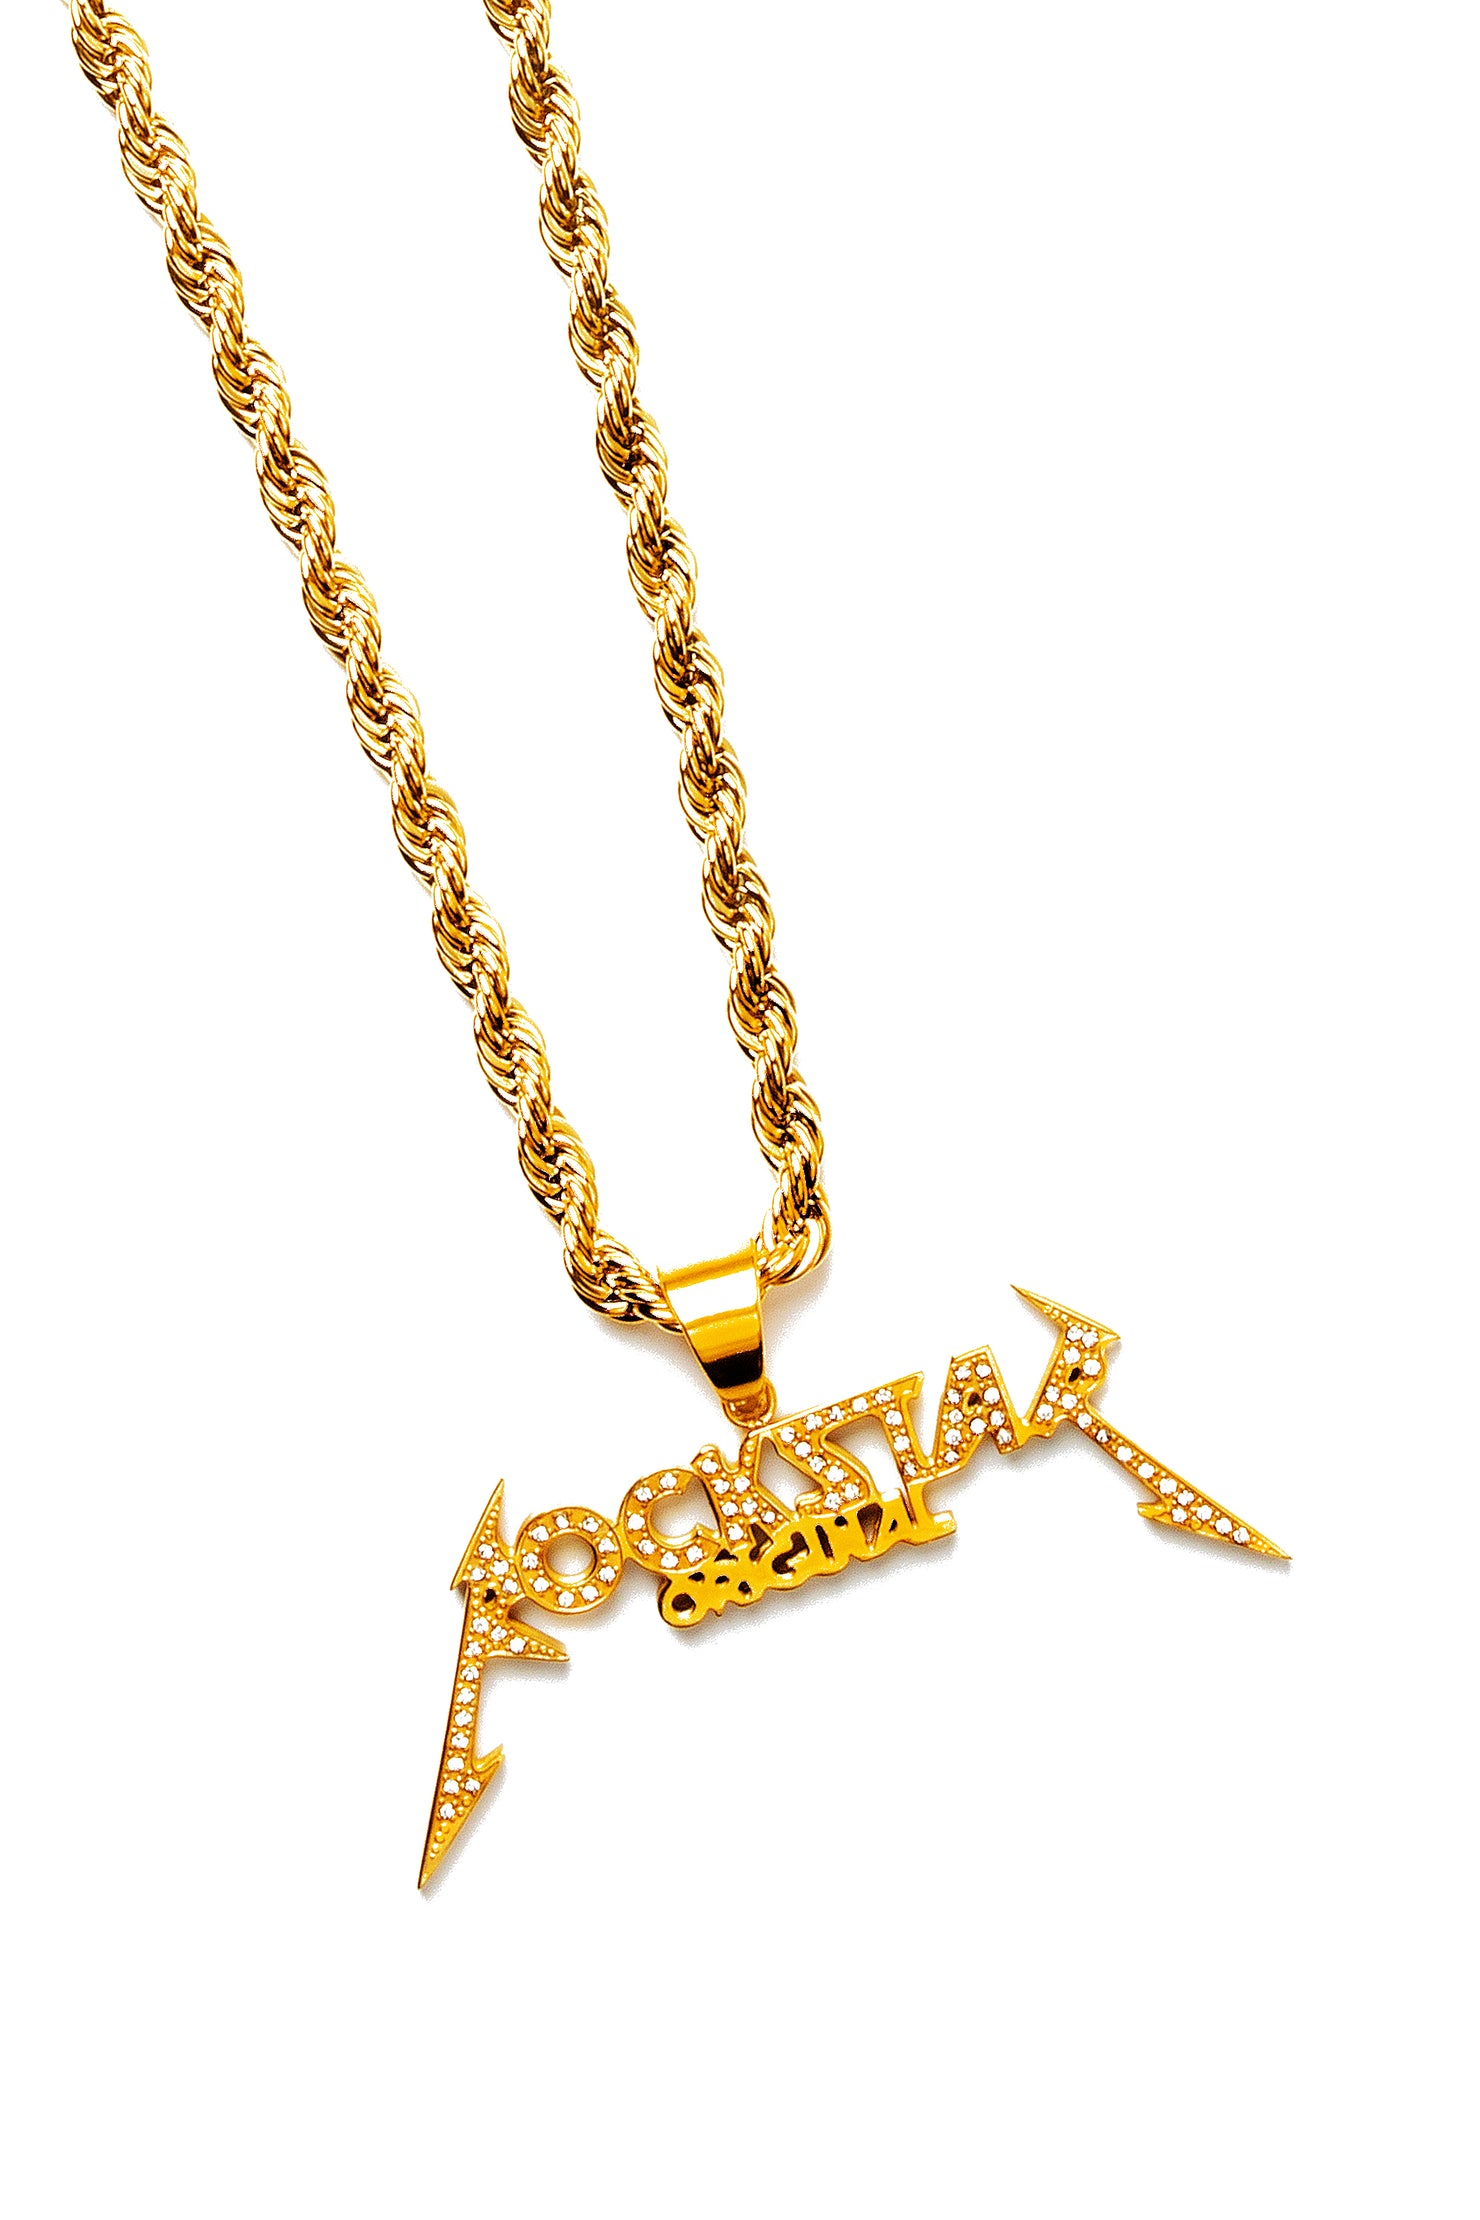 Rockstar Original Pendant Necklace - Gold